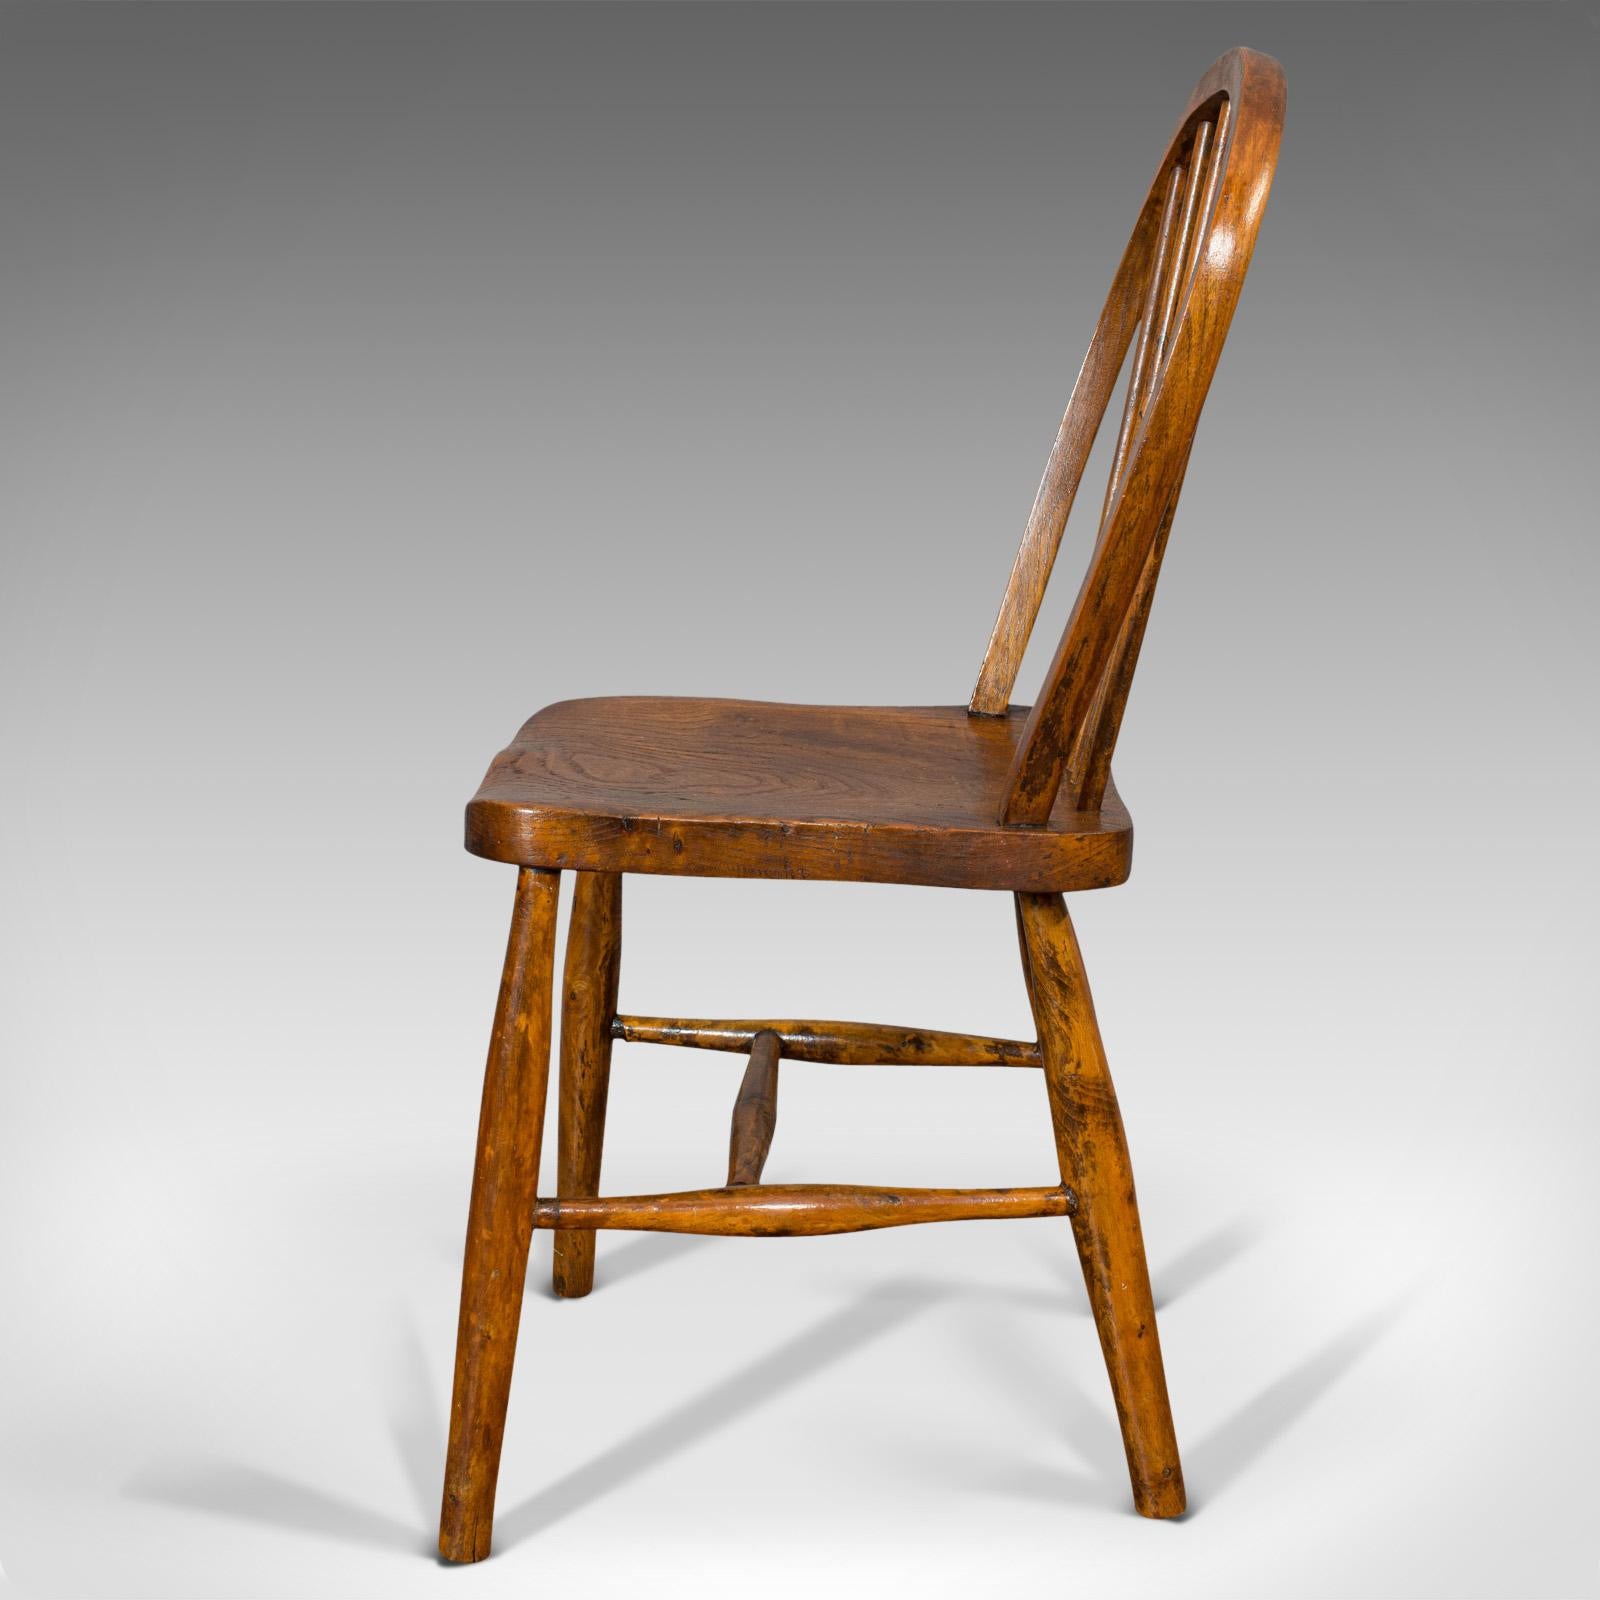 British Antique Stick Back Chair, English, Elm, Beech, Station Seat, Victorian